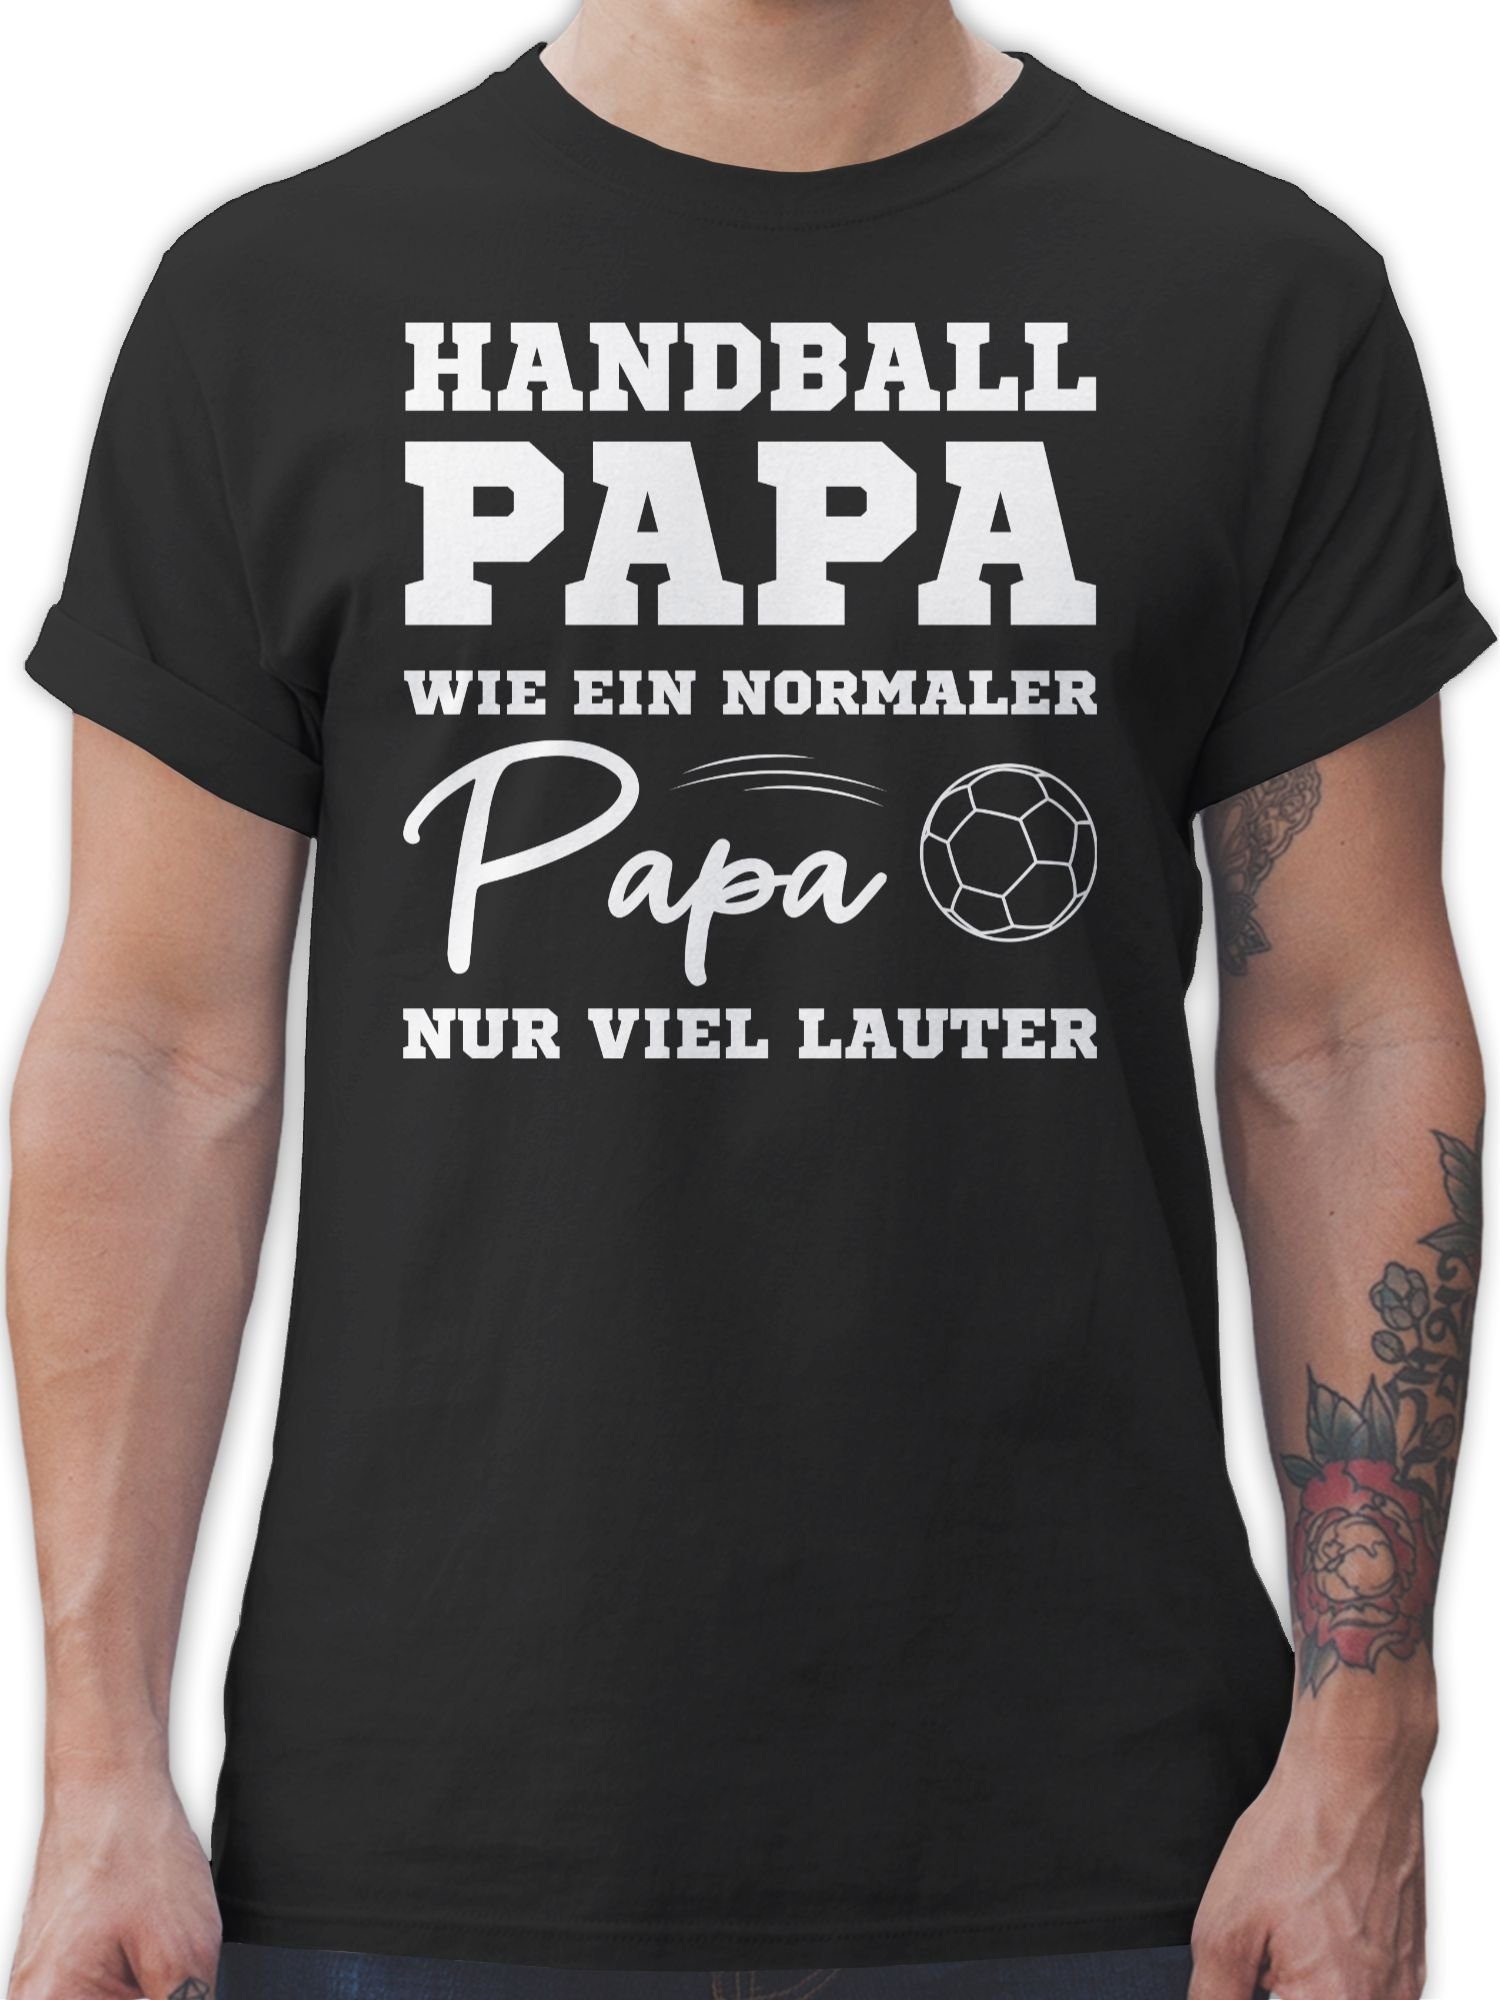 Shirtracer T-Shirt 01 2023 WM normaler Handball viel weiß Papa ein Handball Trikot Schwarz wie Ersatz nur lauter Papa